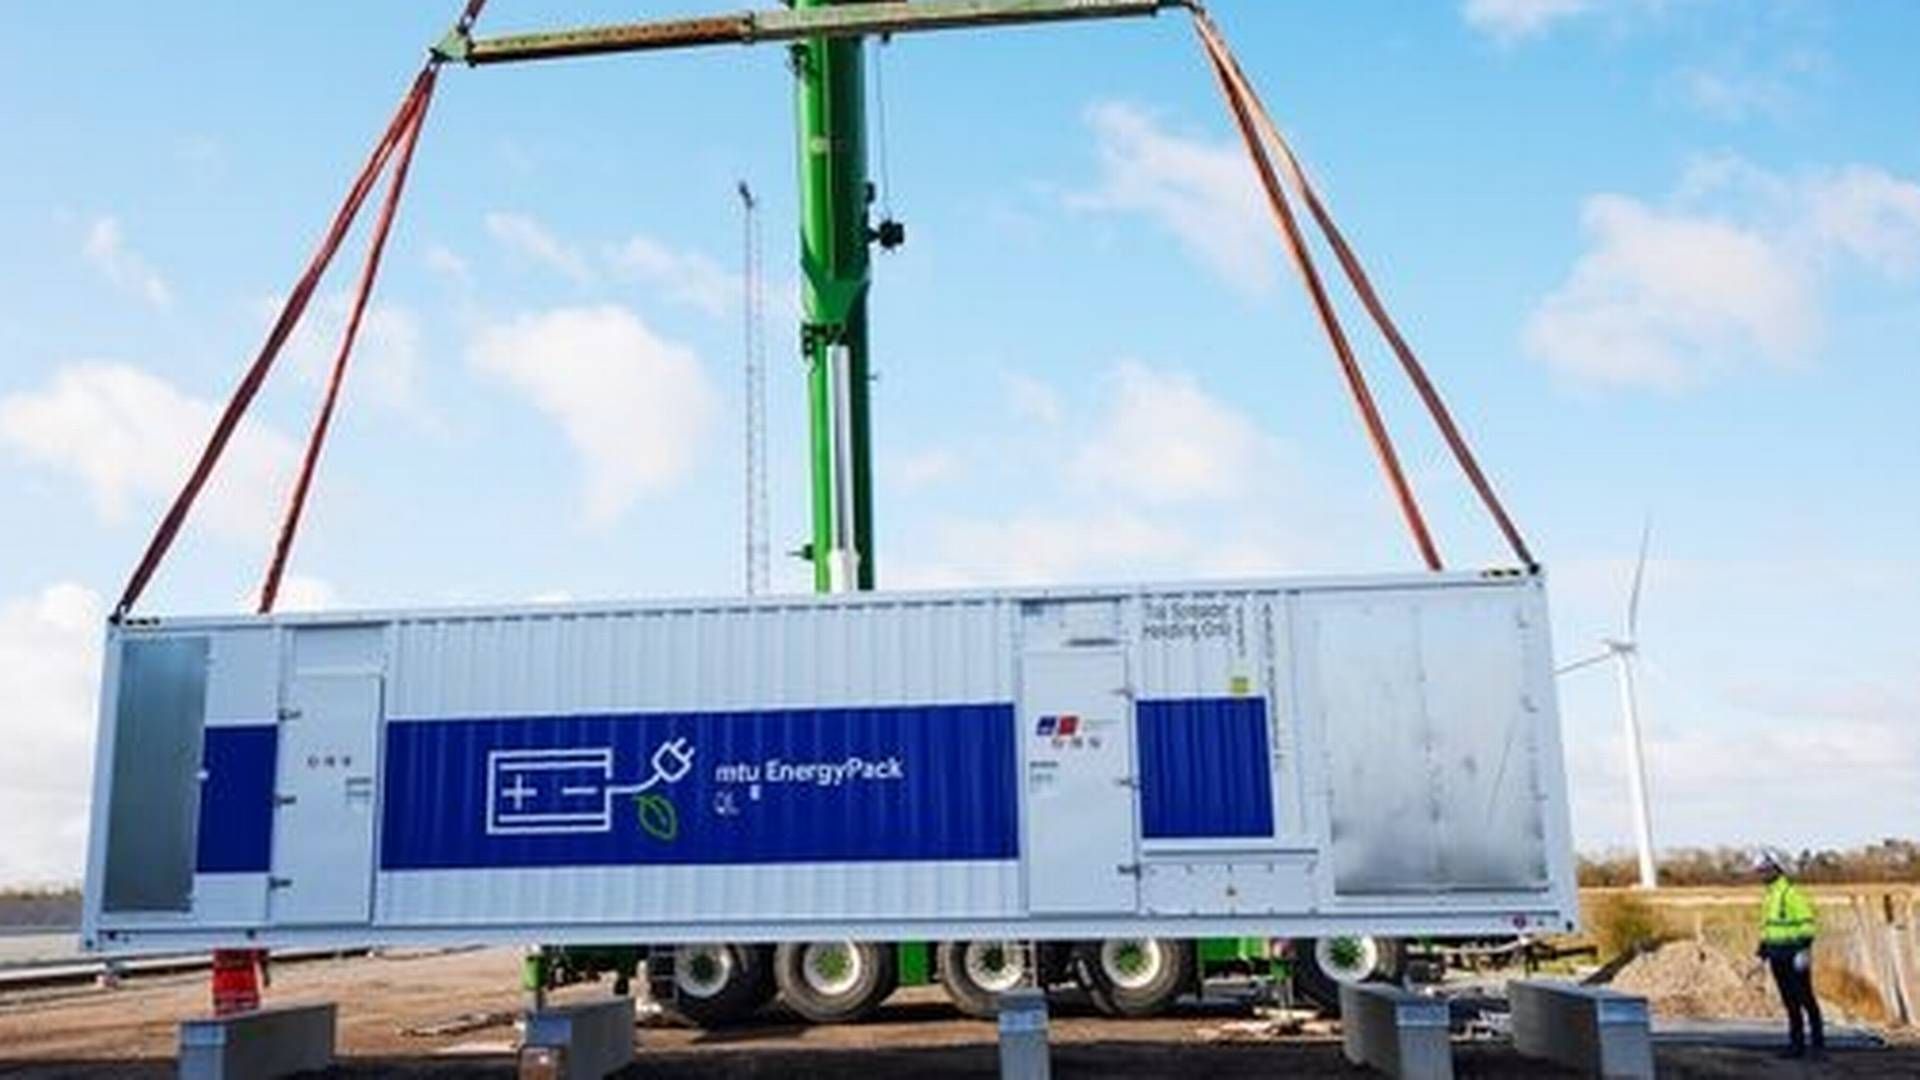 Ewiis batterisystem har en kapacitet på 2 megawatt og 2,2 megawatt-timer og fylder en 40 fods container, som står placeret hos Lindø Offshore Renewables Center på Fyn. | Foto: Blitz 77